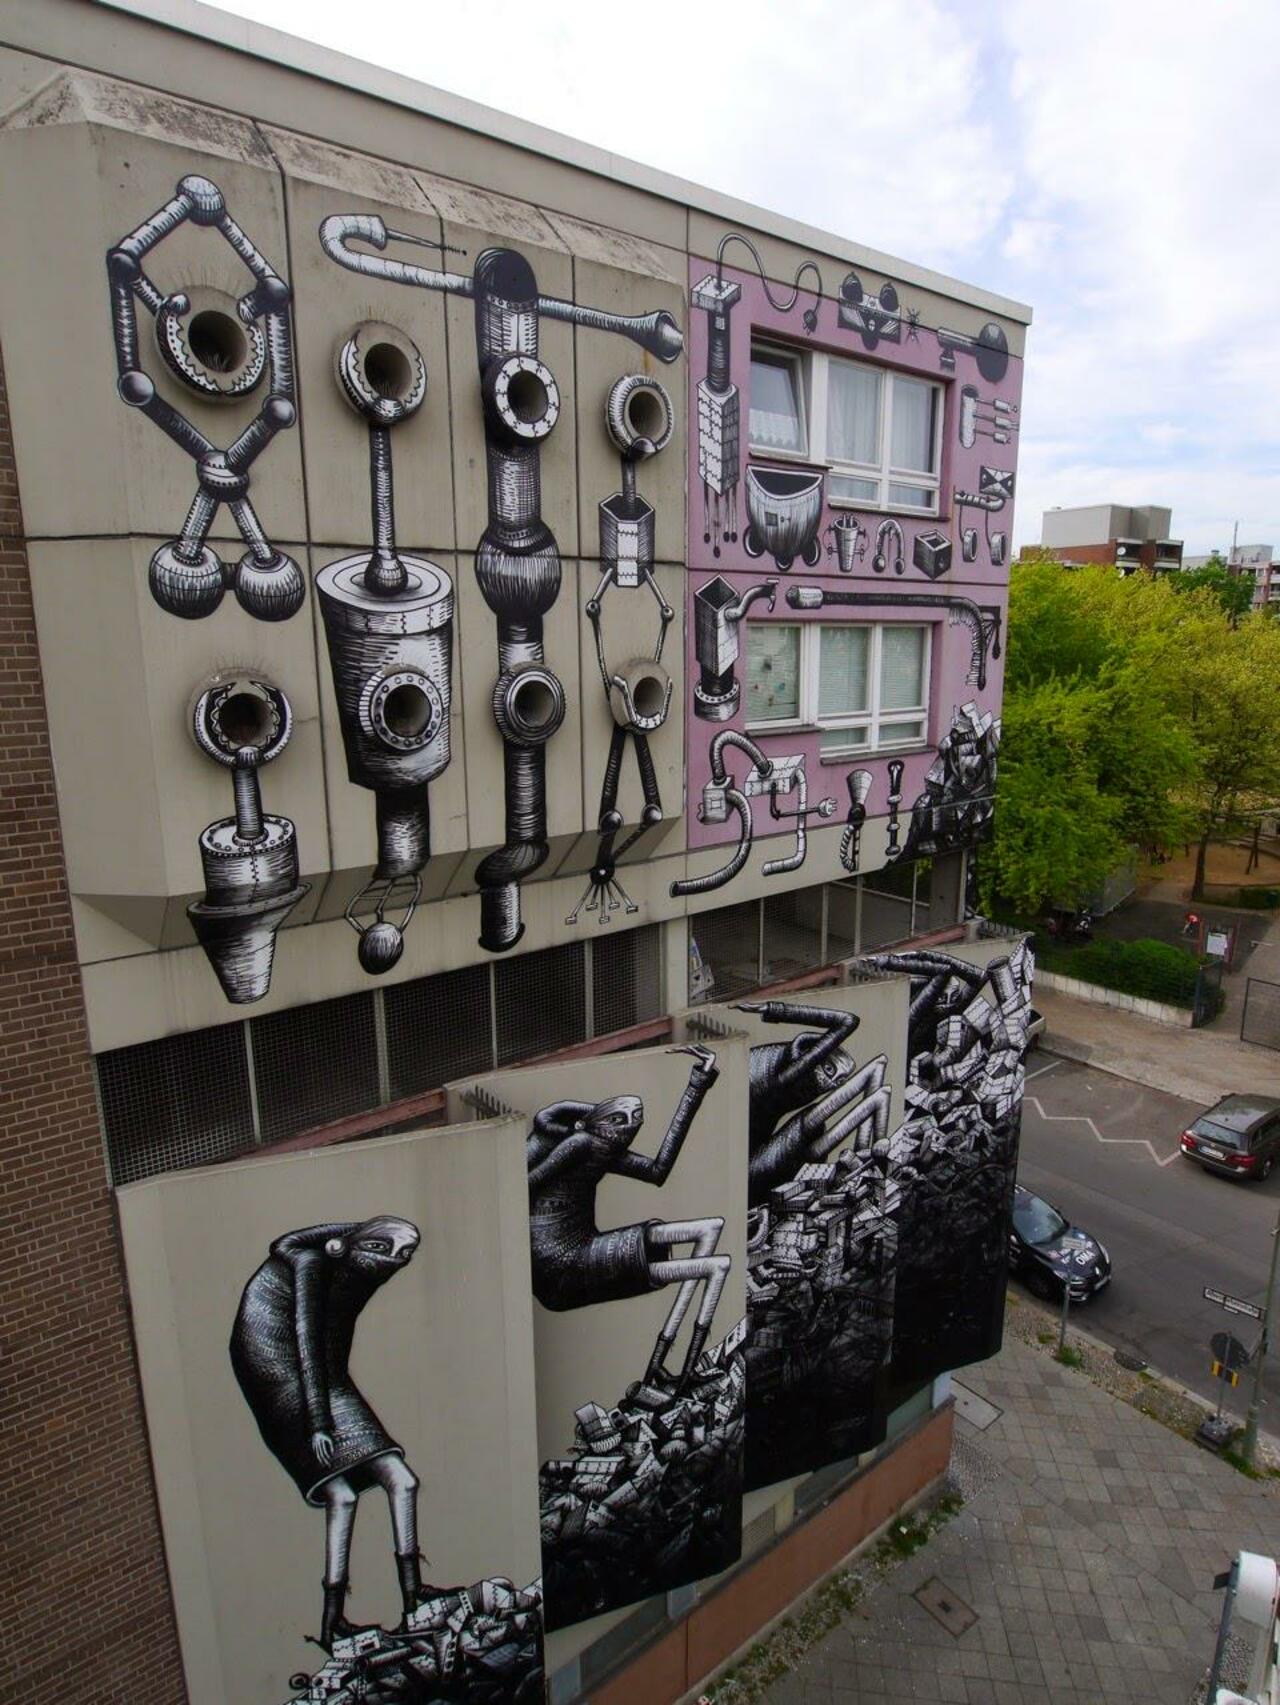 #Streetart #urbanart #graffiti #painting #mural by English #artist Phlegm in Berlin, Germany http://t.co/8BgDhdd2Y1 RT @Brindille_